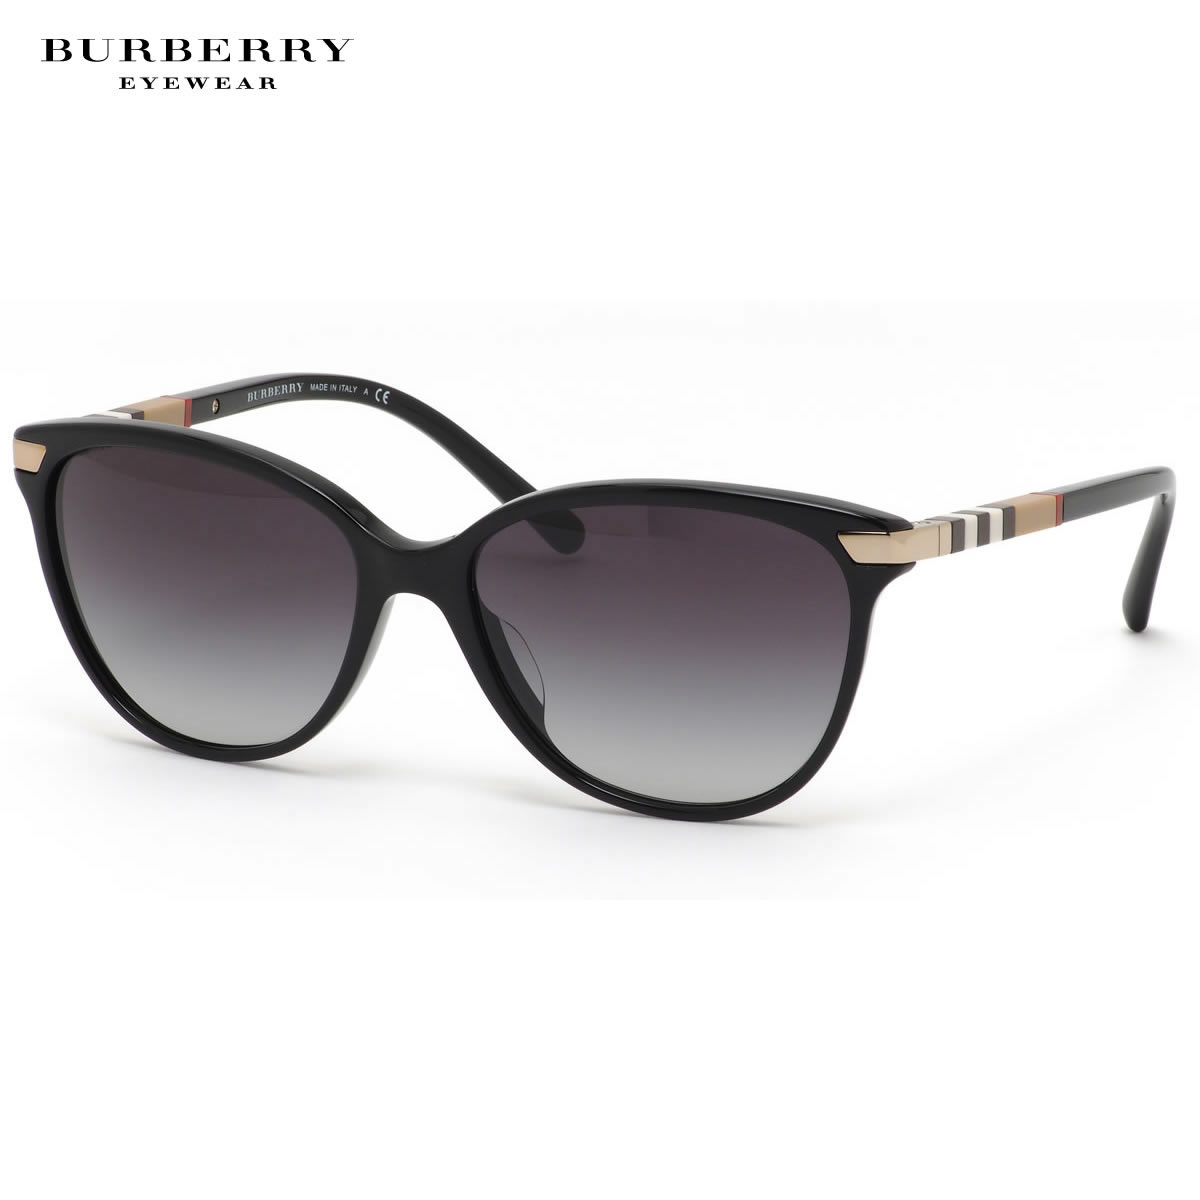 burberry sunglasses price in india